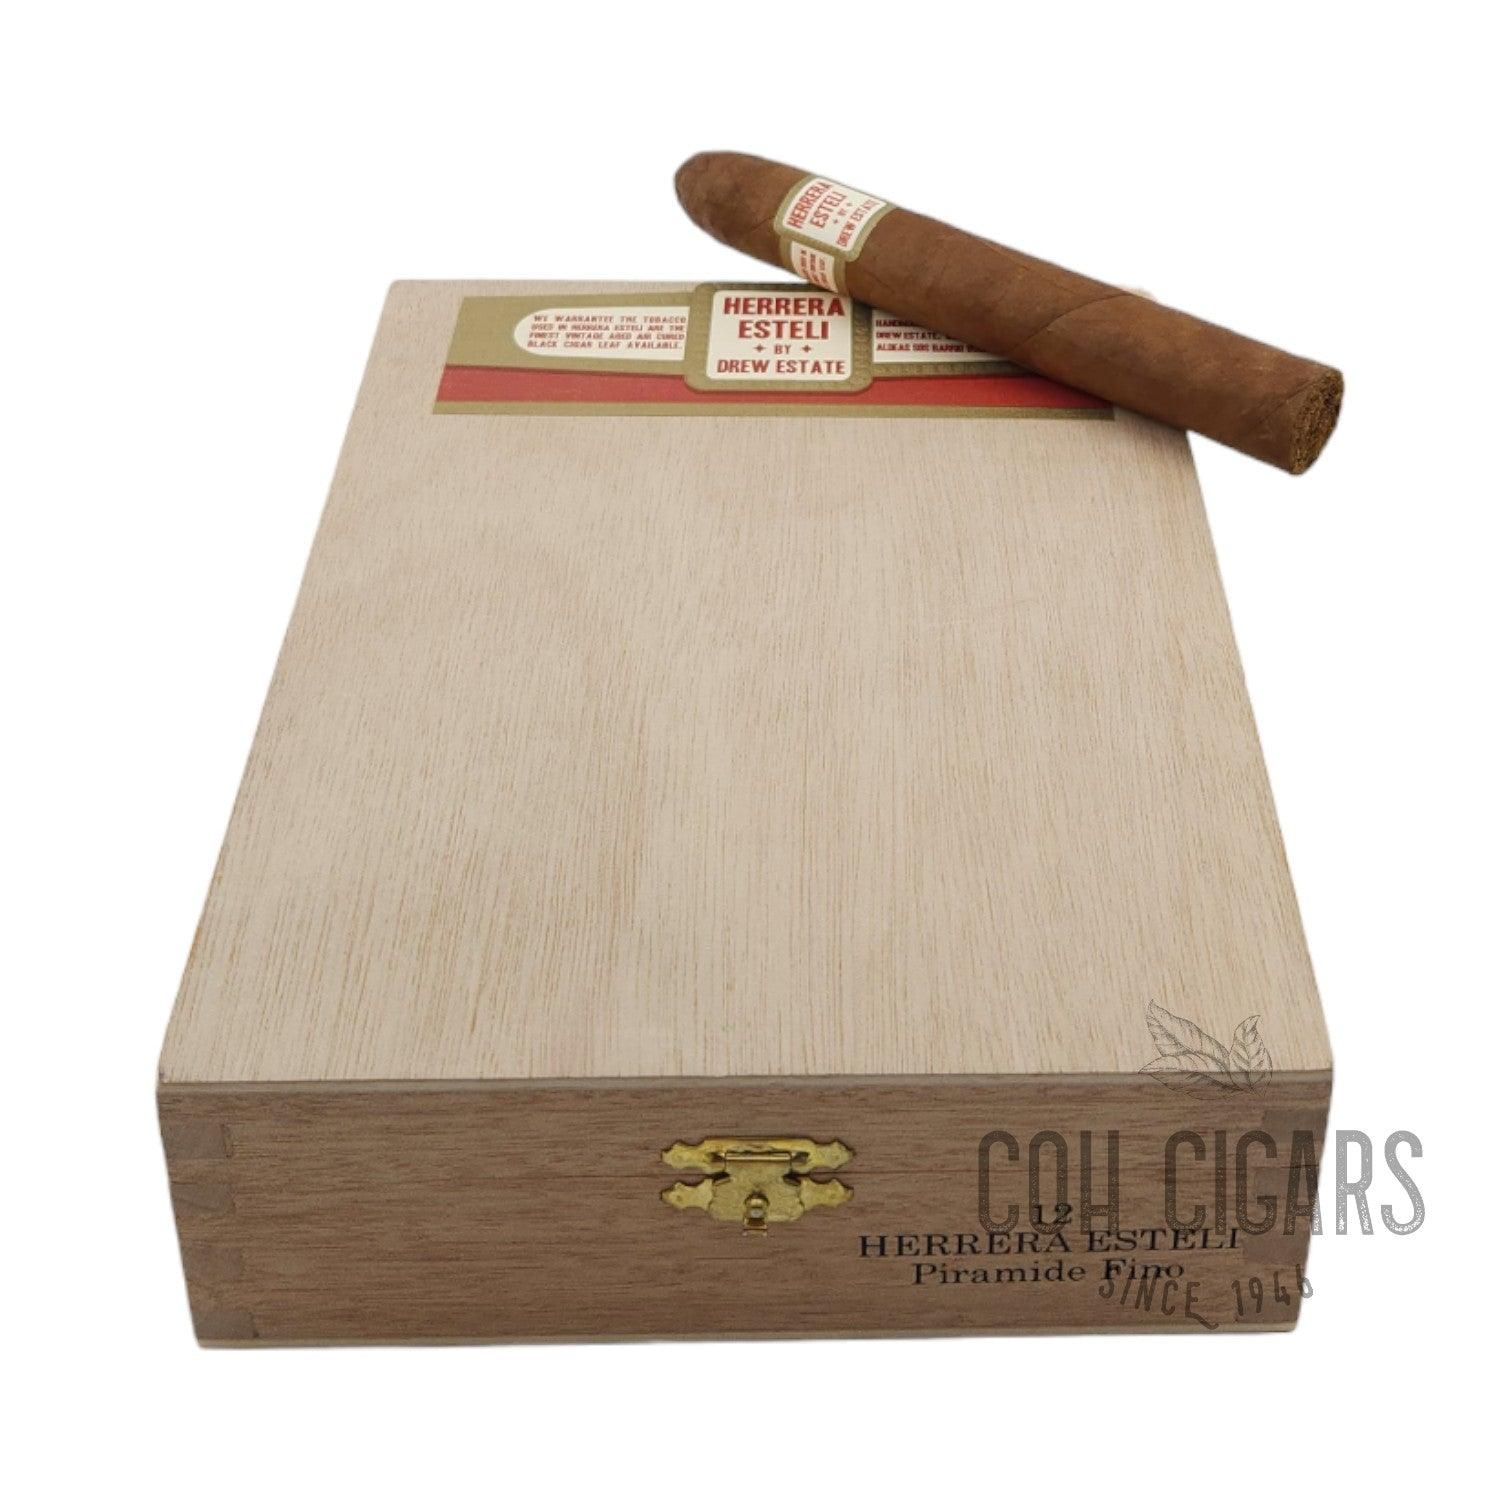 Drew Estate Cigar | Herrera Esteli Piraminide Fino | Box 12 - HK CohCigars